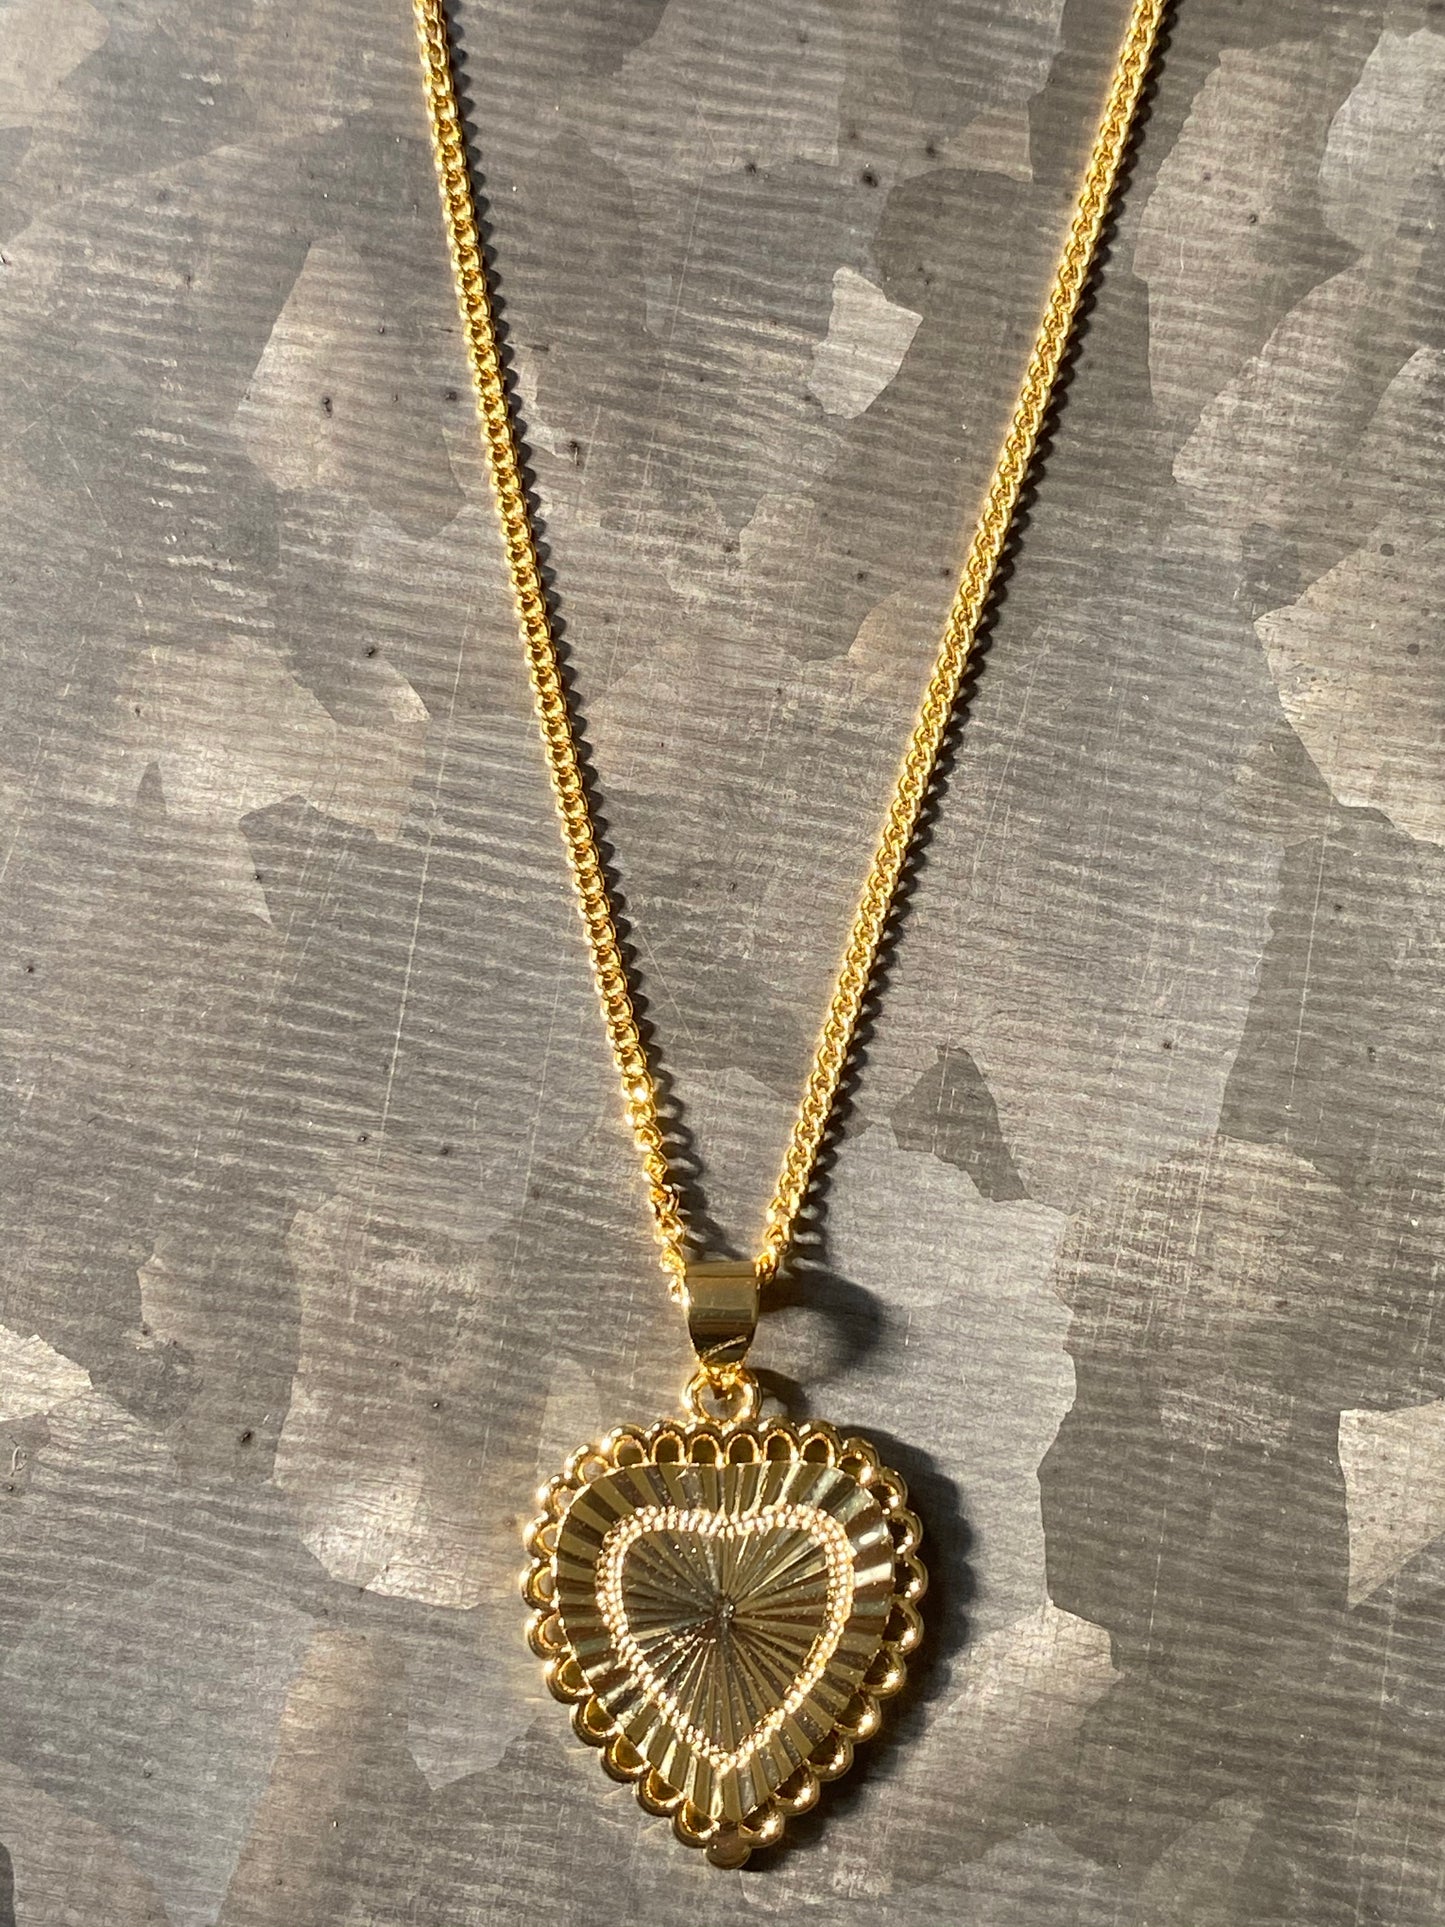 Golden Heart Pendant